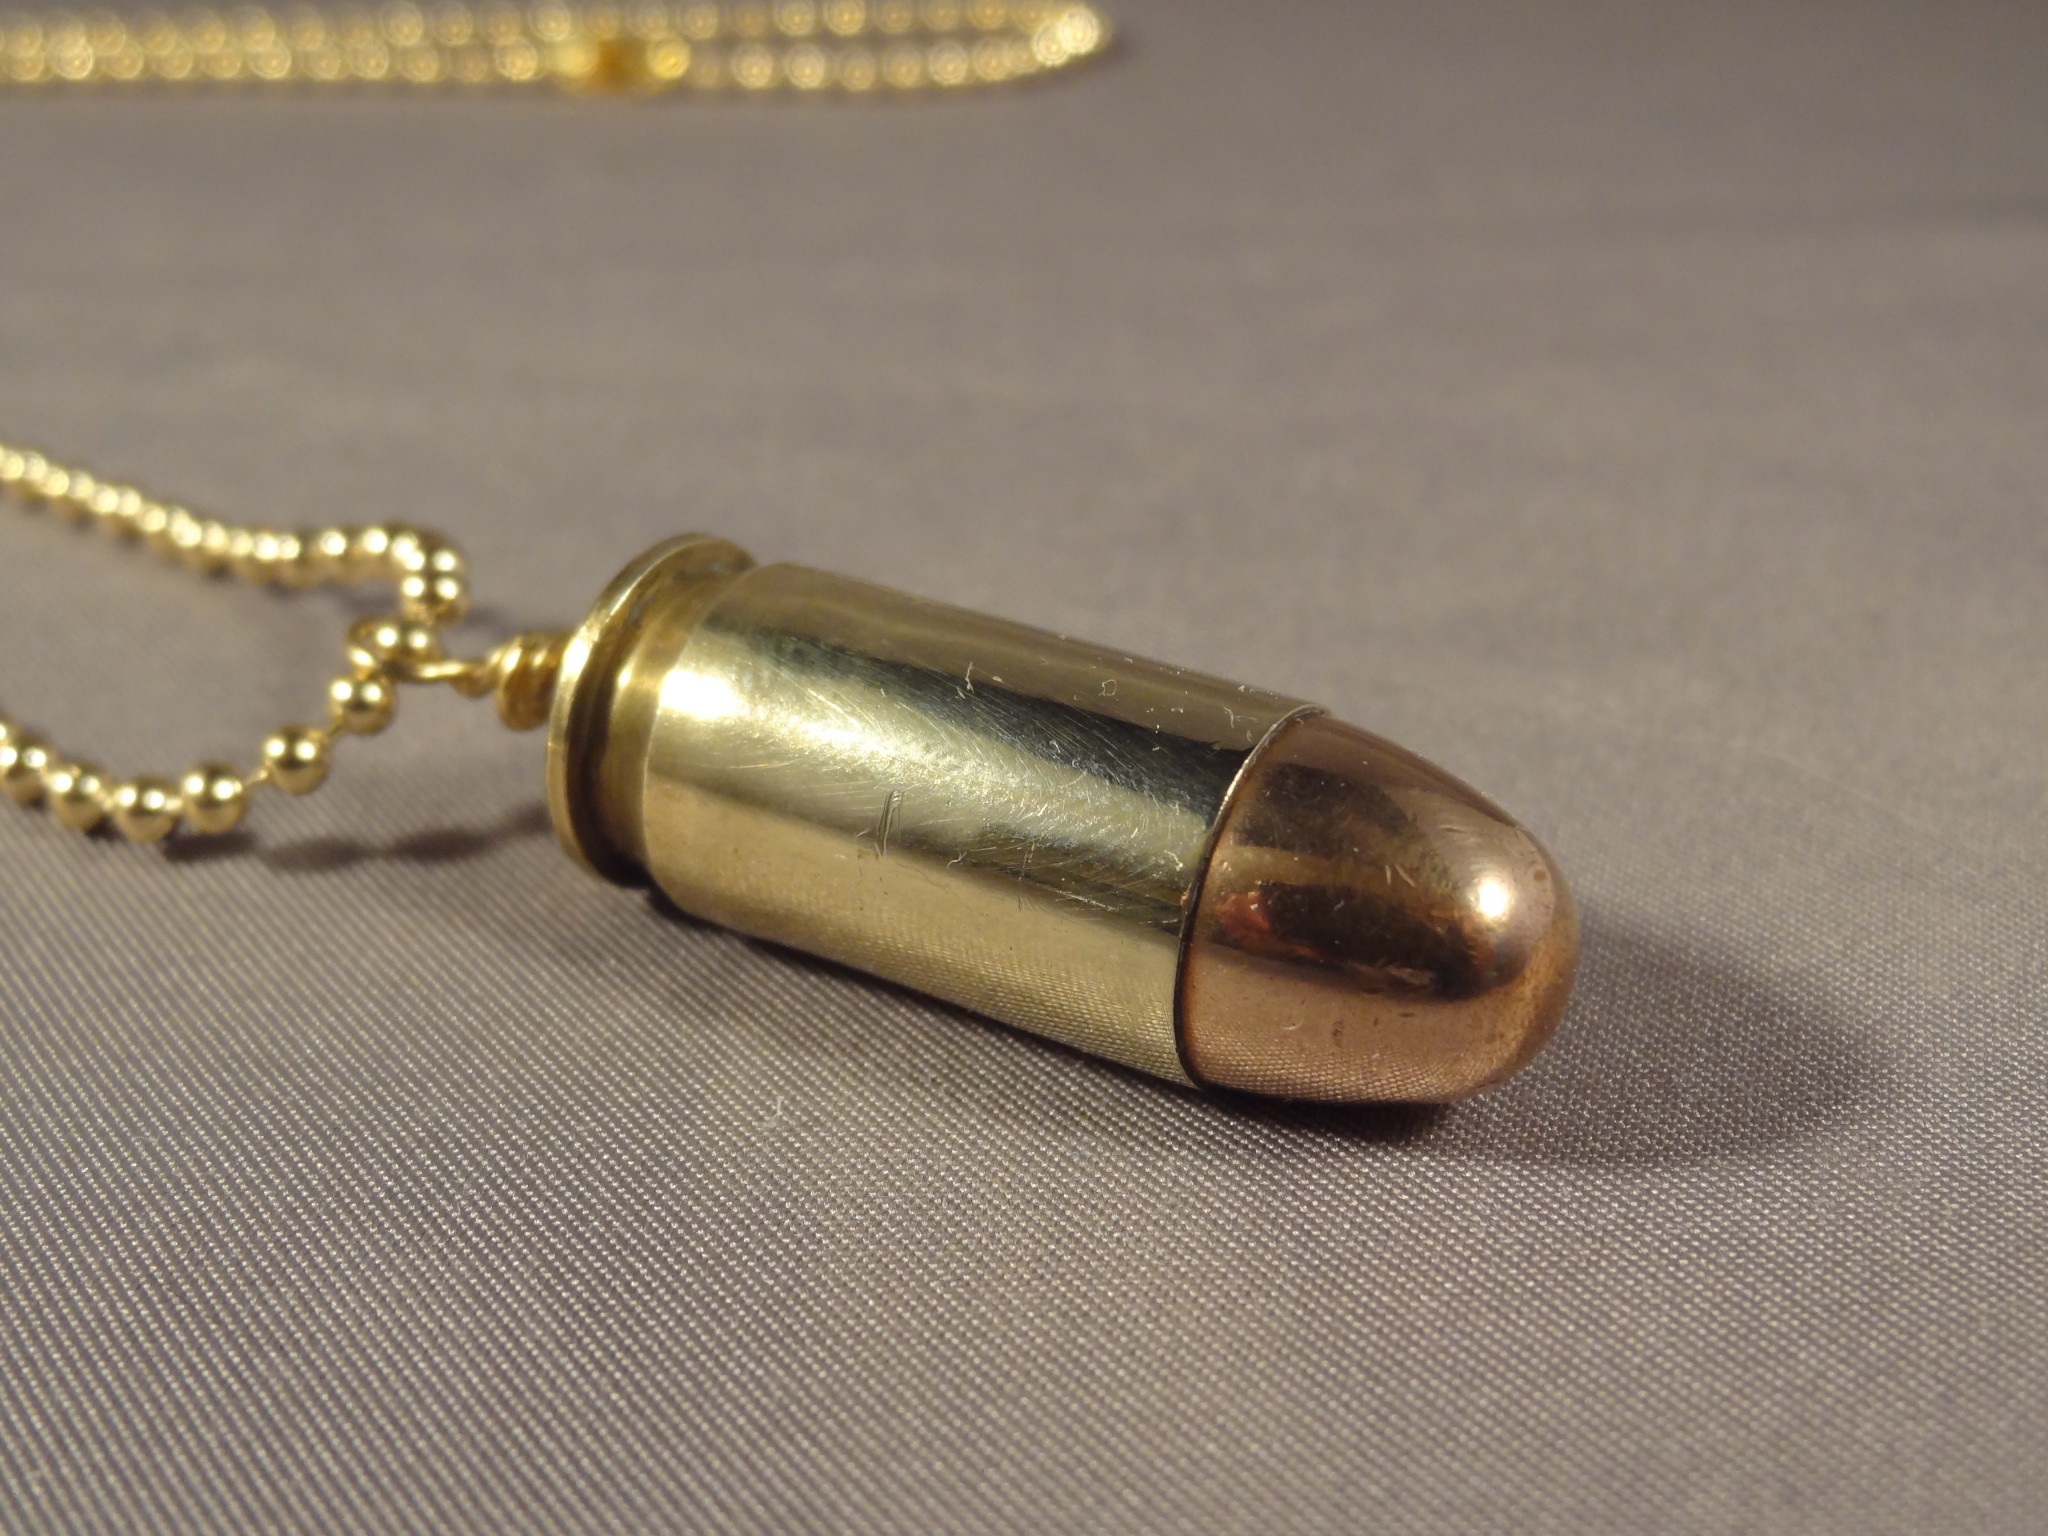 Skull Engraved Bullet Necklace - Alternative Gothic Jewellery | eBay